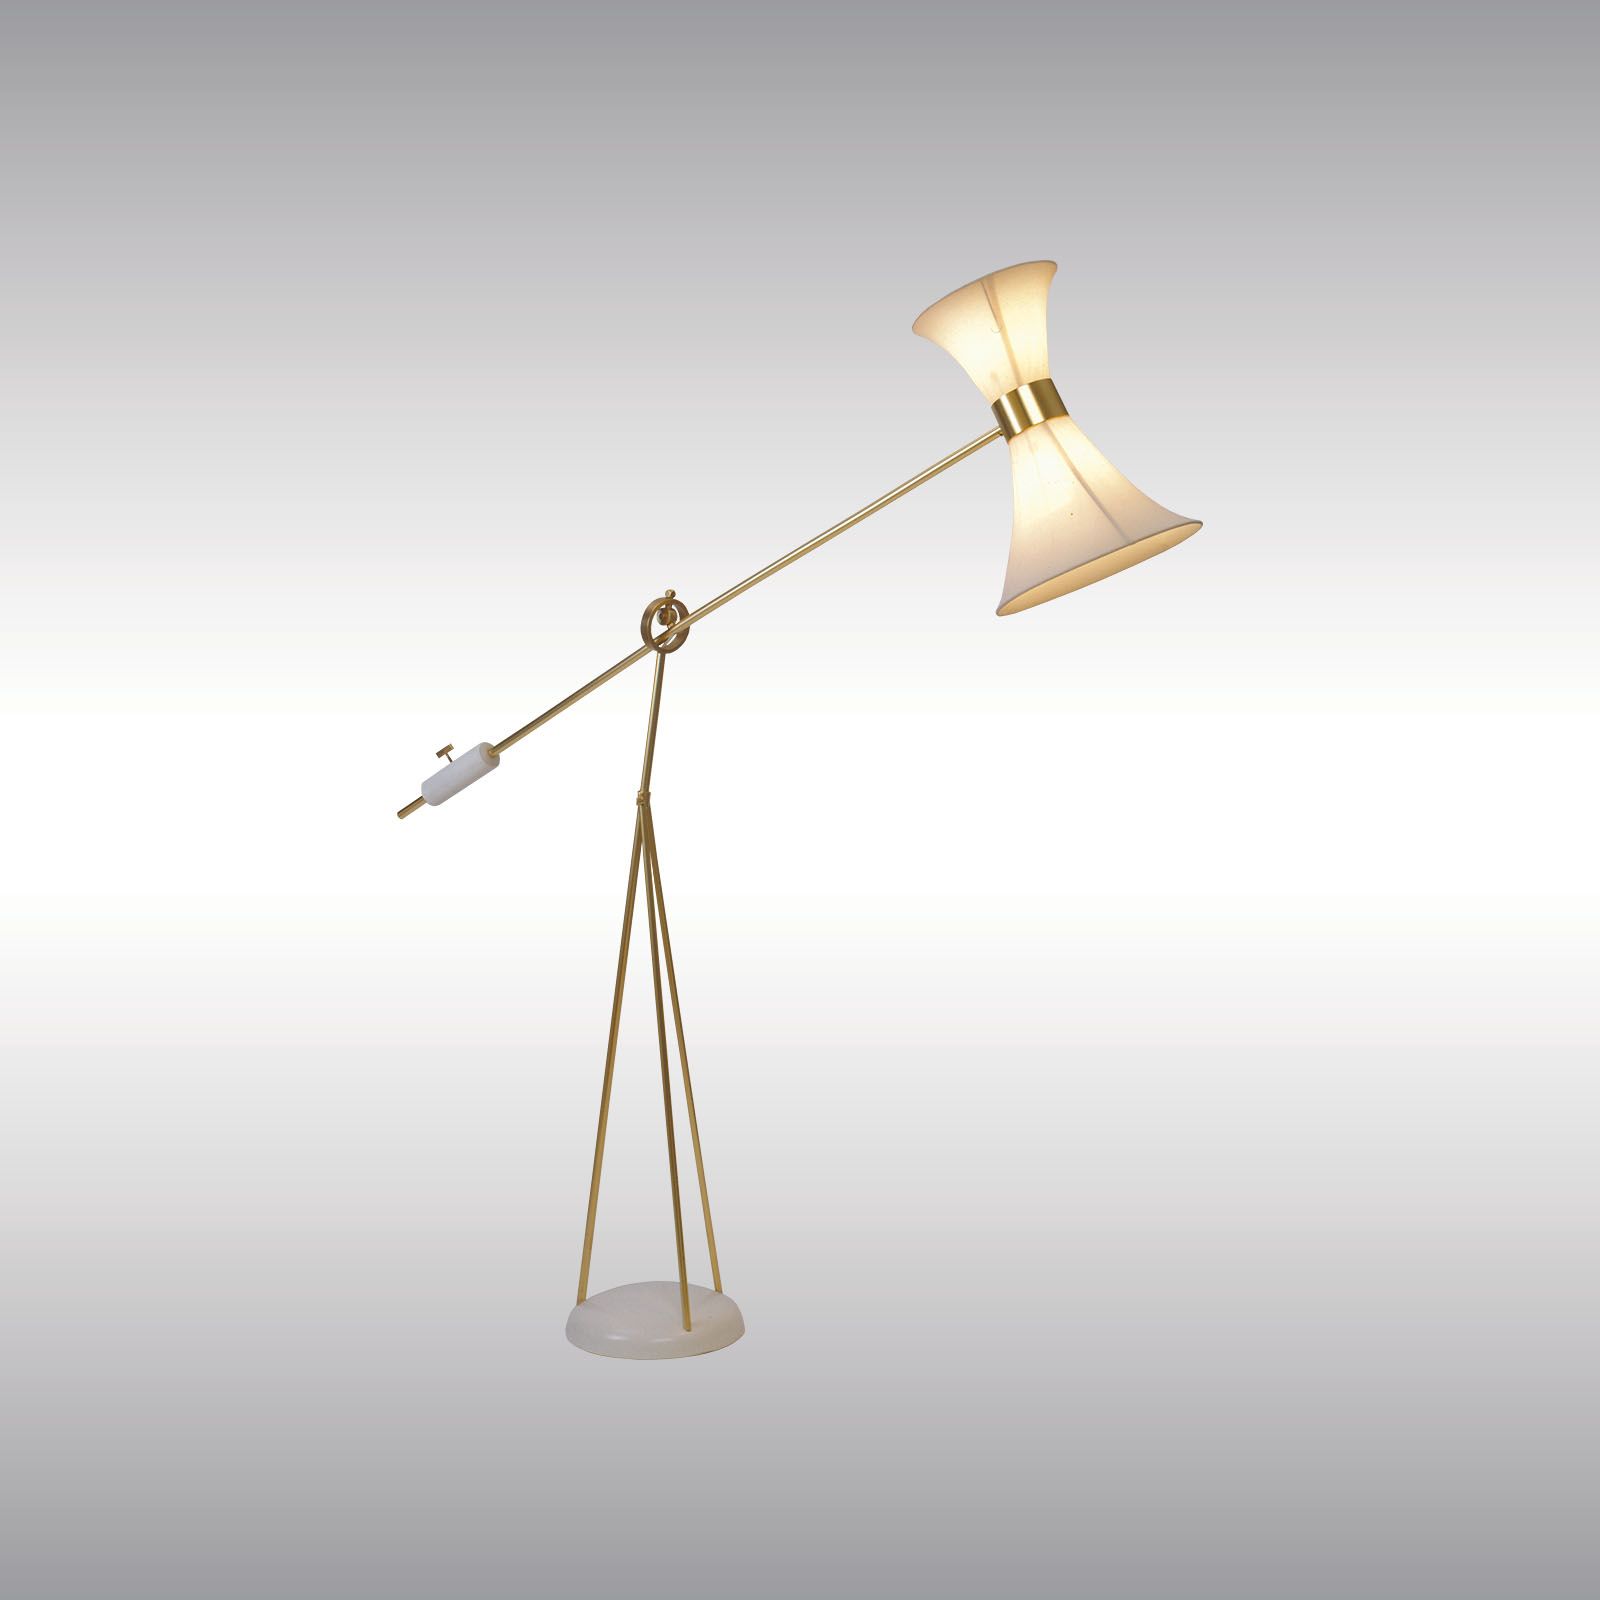 WOKA LAMPS VIENNA - OrderNr.: 9409|Jolly Jumper - Design: WOKA